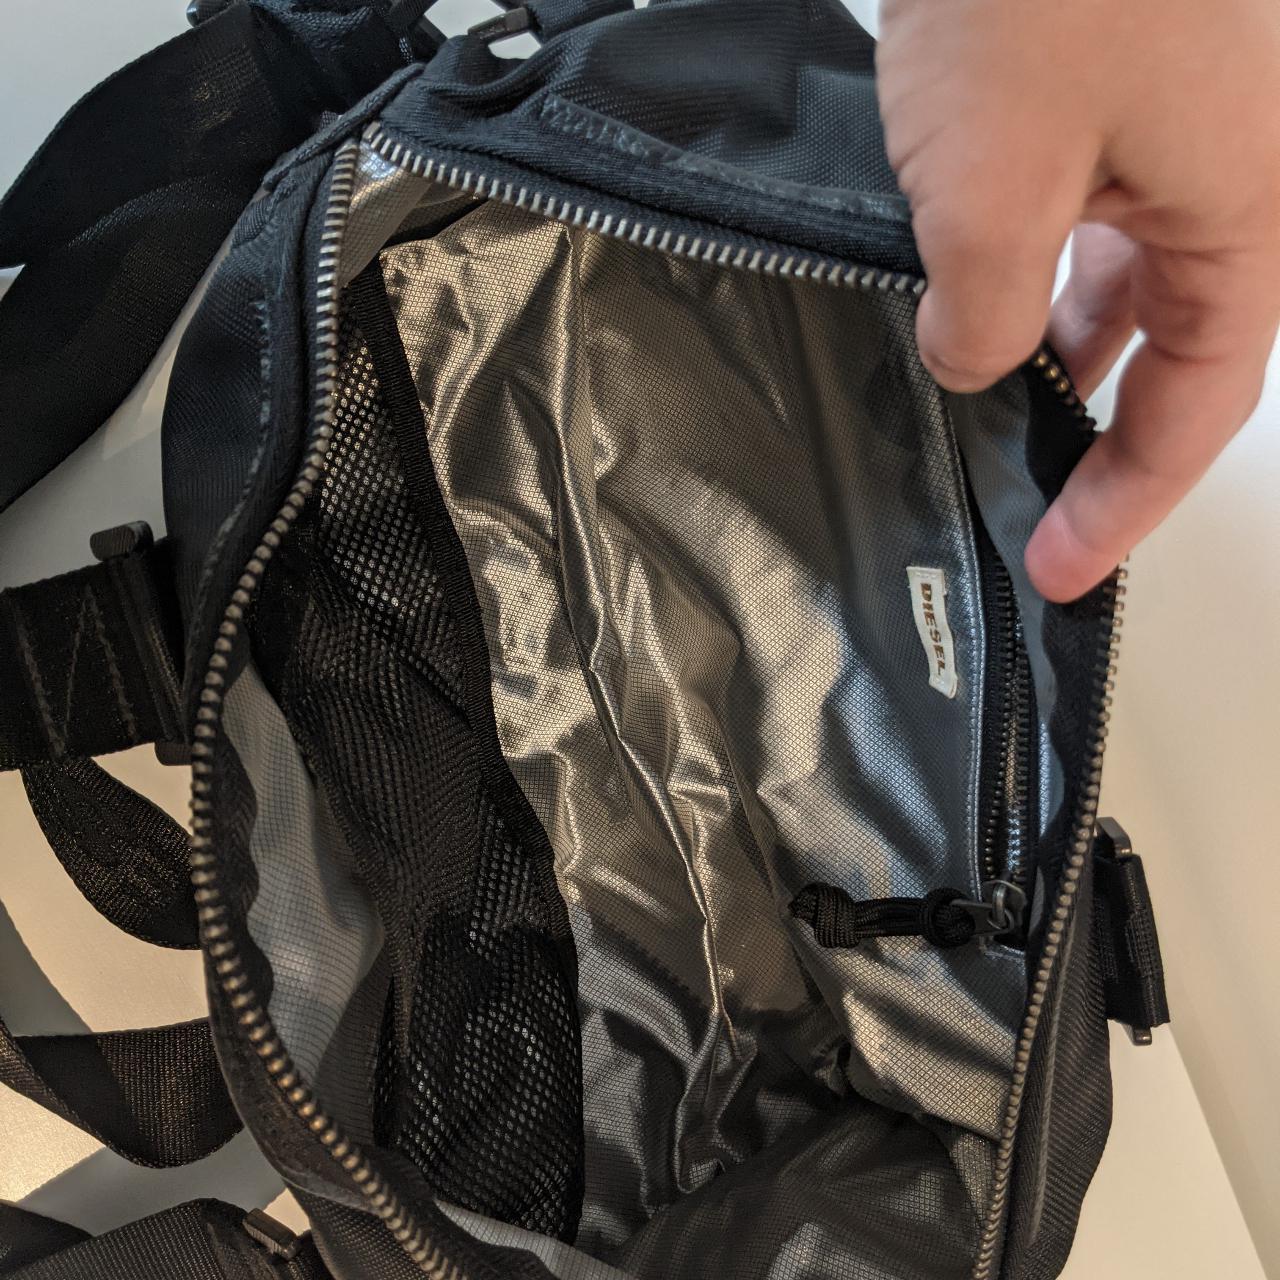 Product Image 2 - Black Diesel handbag with adjustable